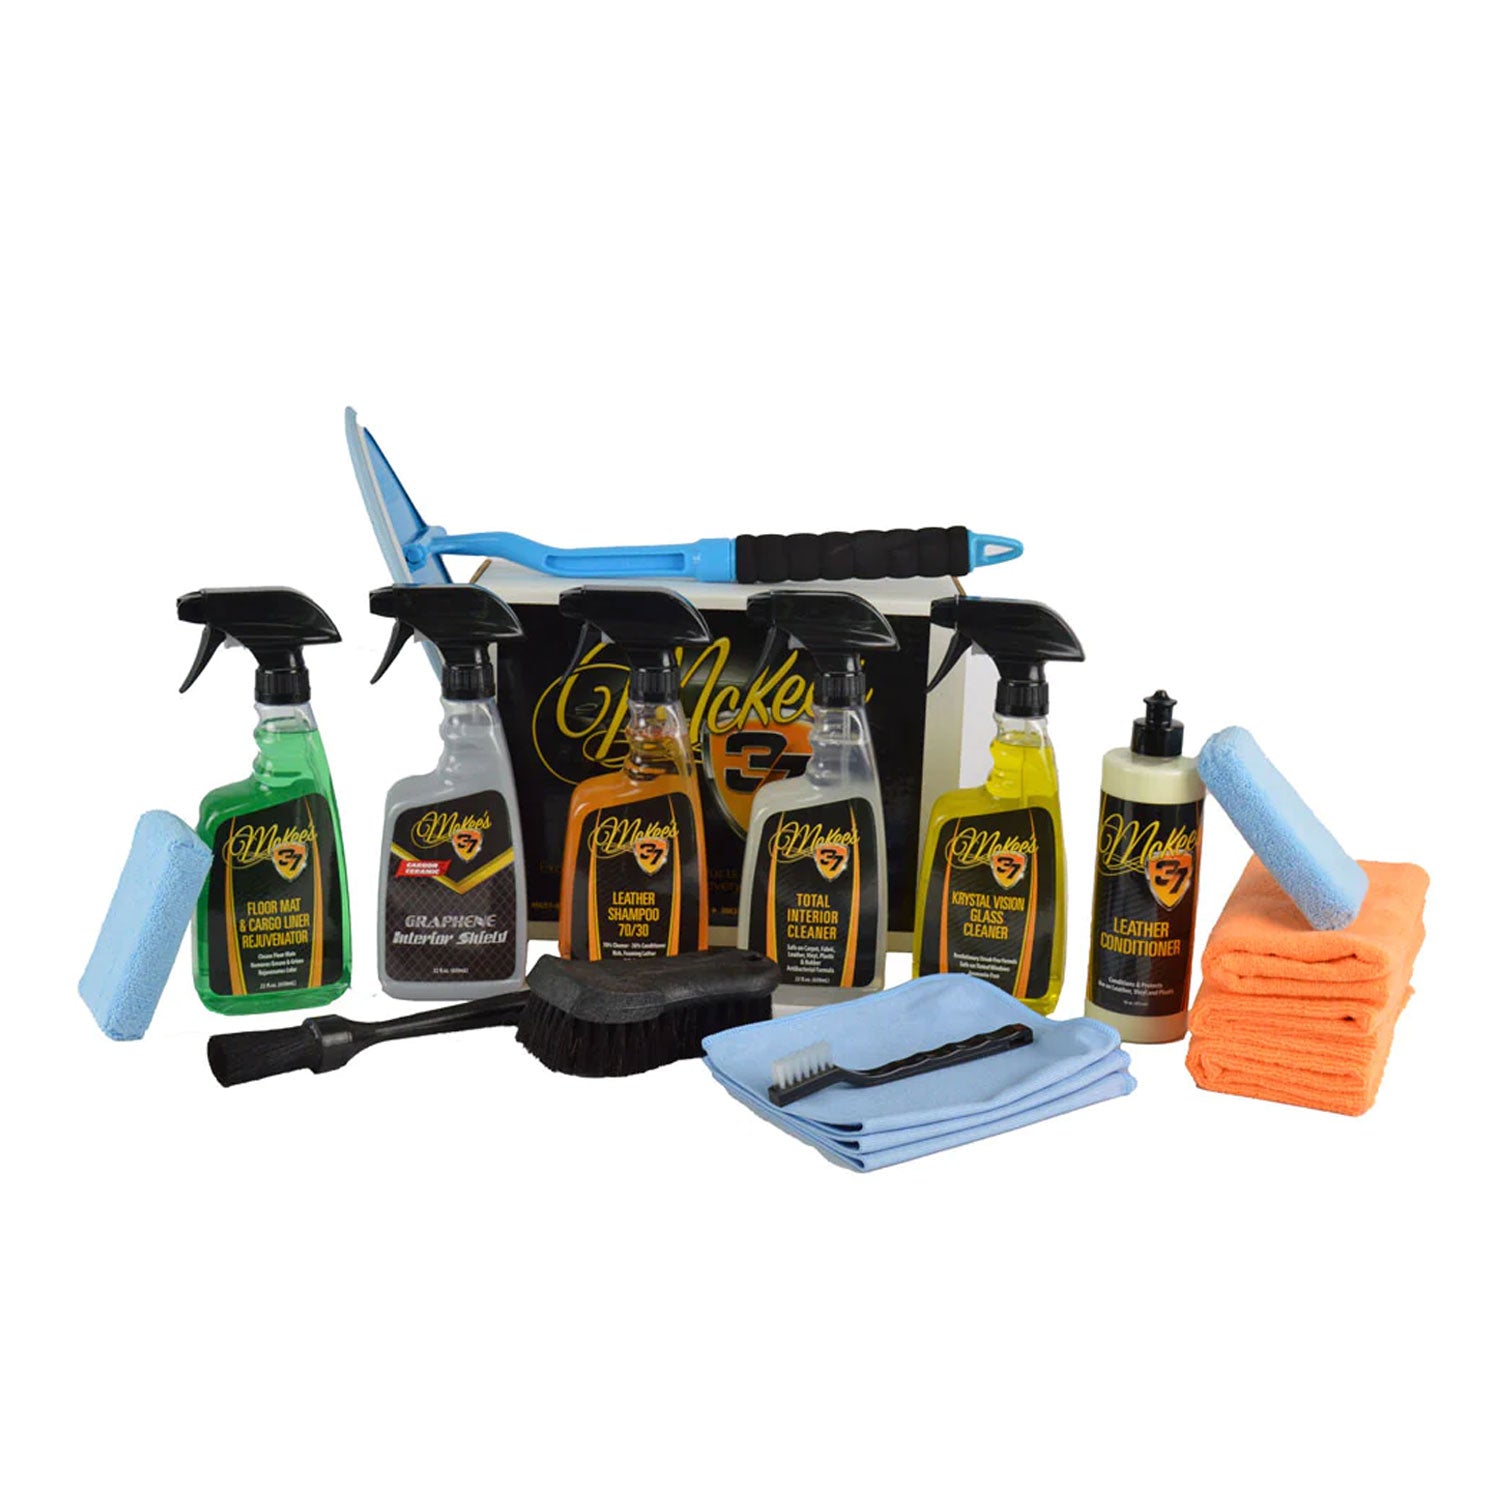 Car Wash Cleaning Kit, Manual Foam Sprayer, Premium Brushes, Professional  Interior/Exterior Car Detailing Kit – Car Care Gift Tool Set for Women and